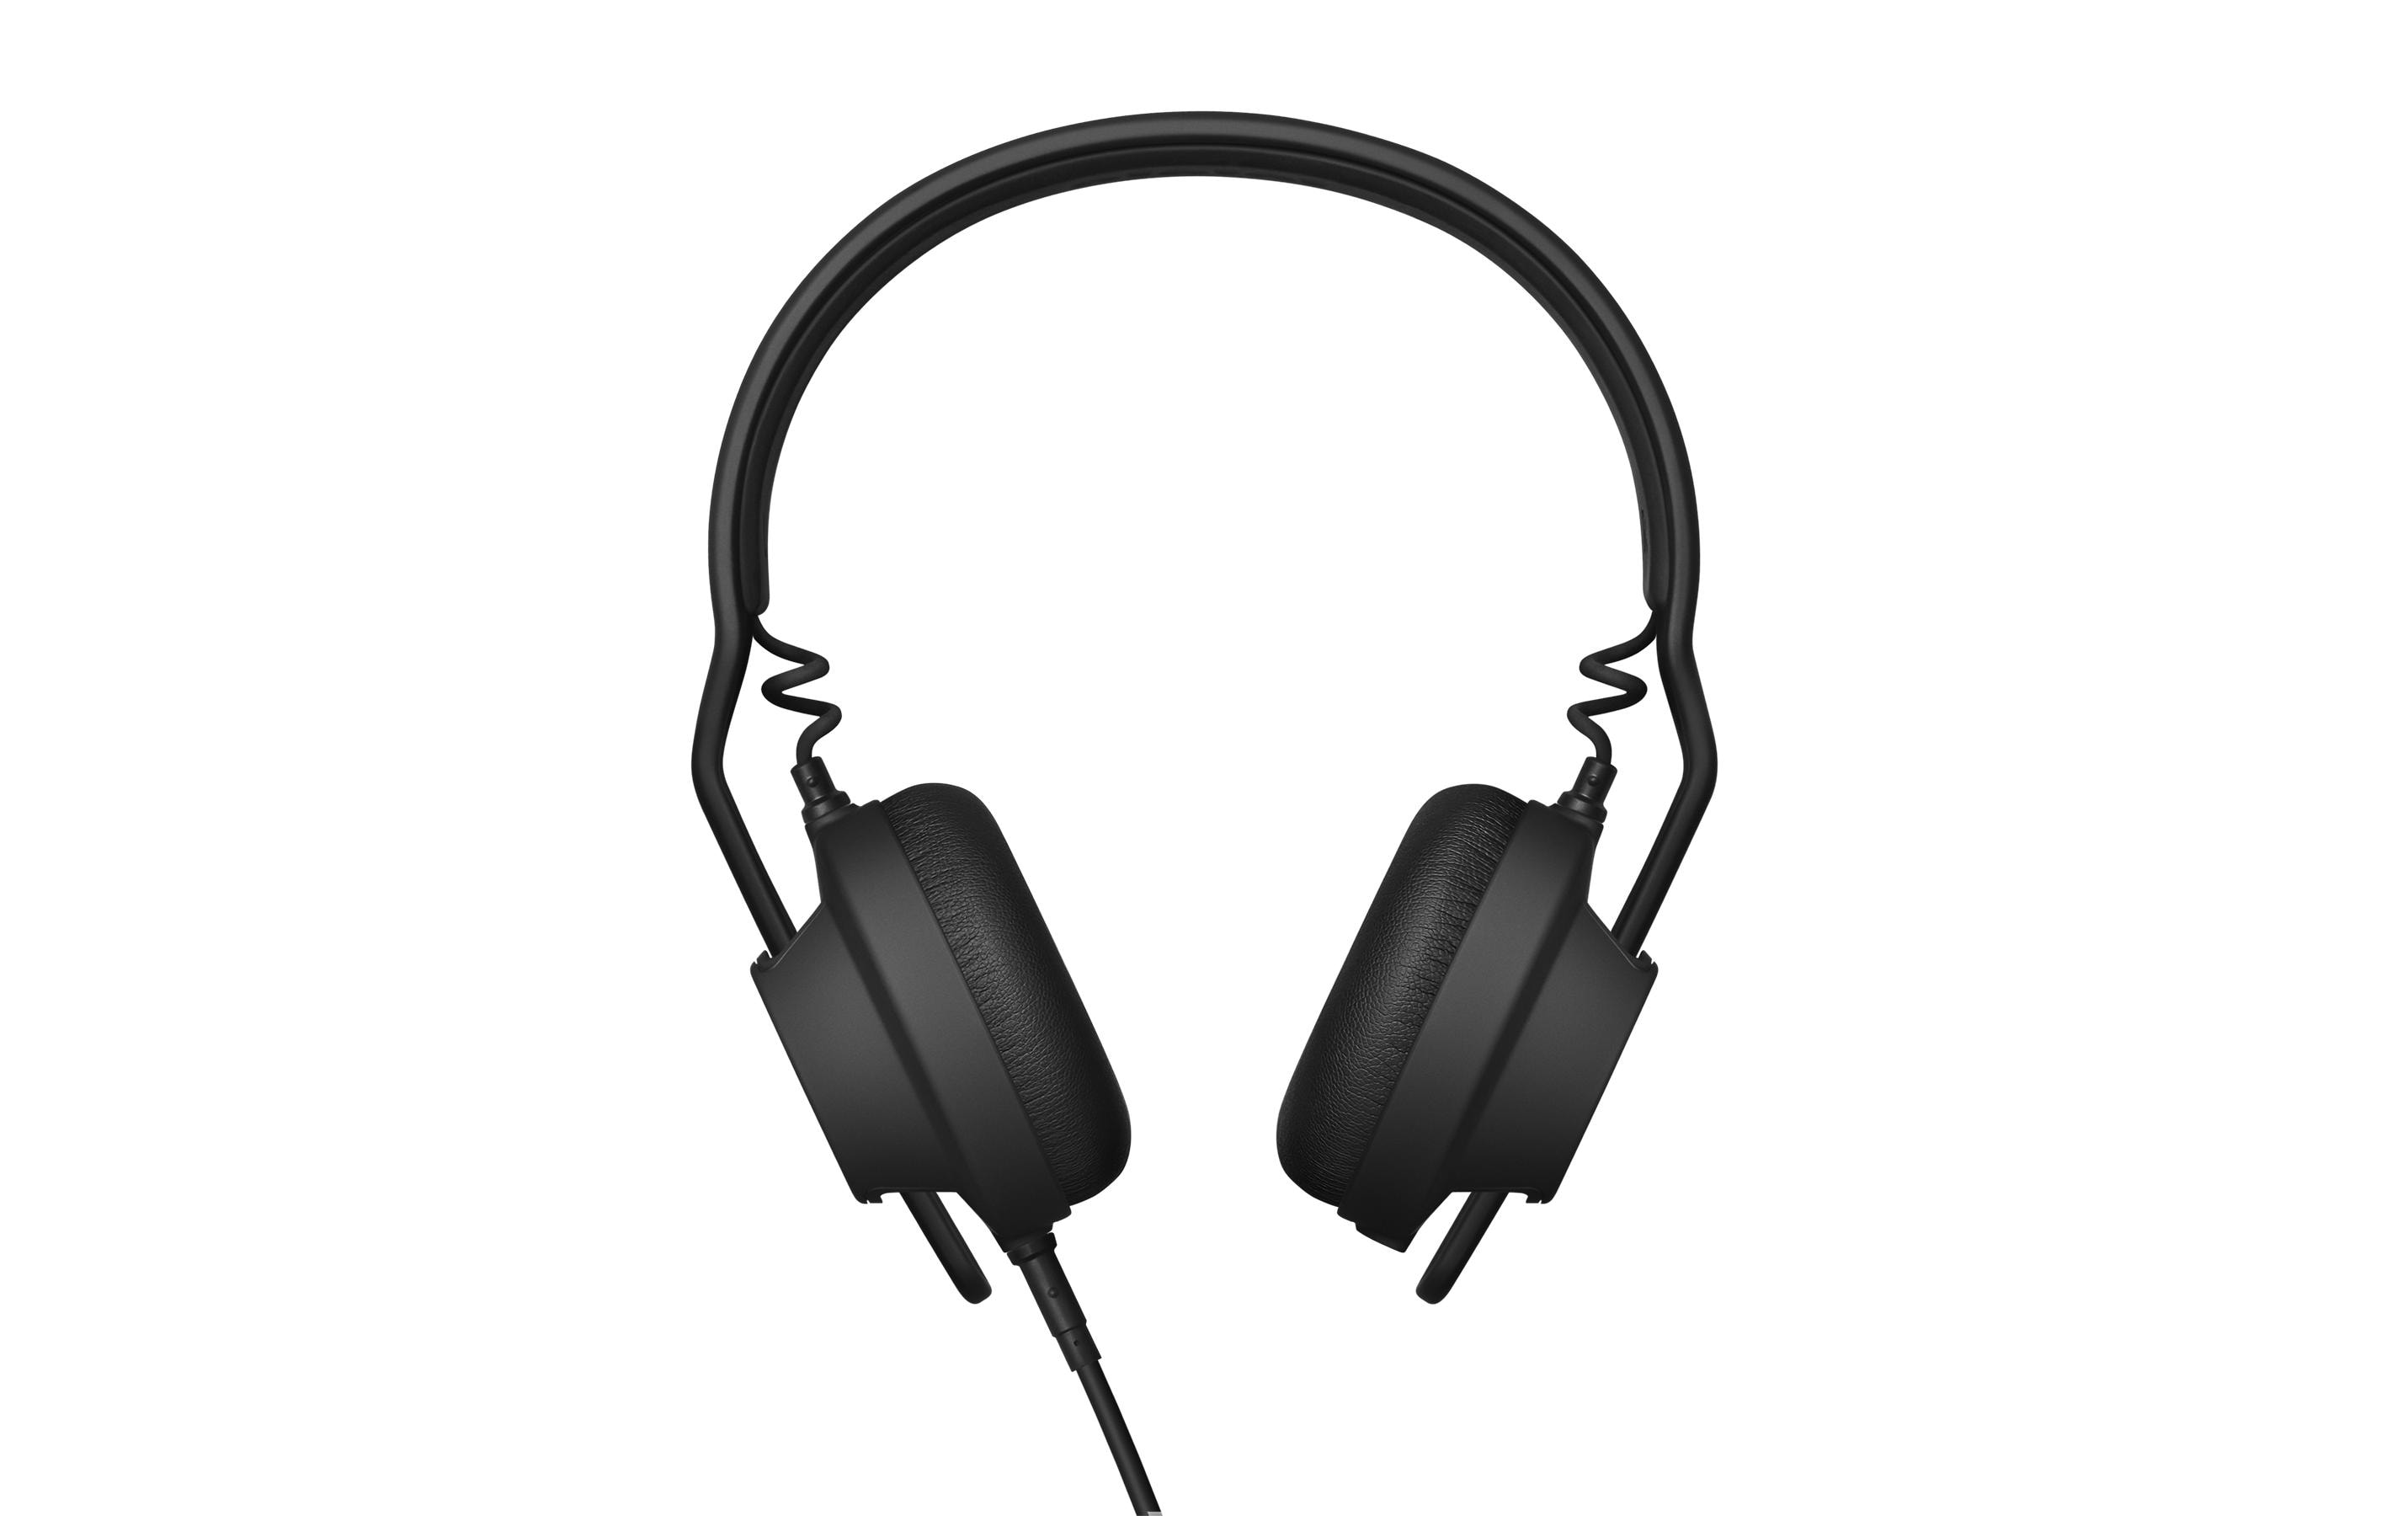 AIAIAI On-Ear-Kopfhörer TMA-2 DJ V2 Preset Schwarz